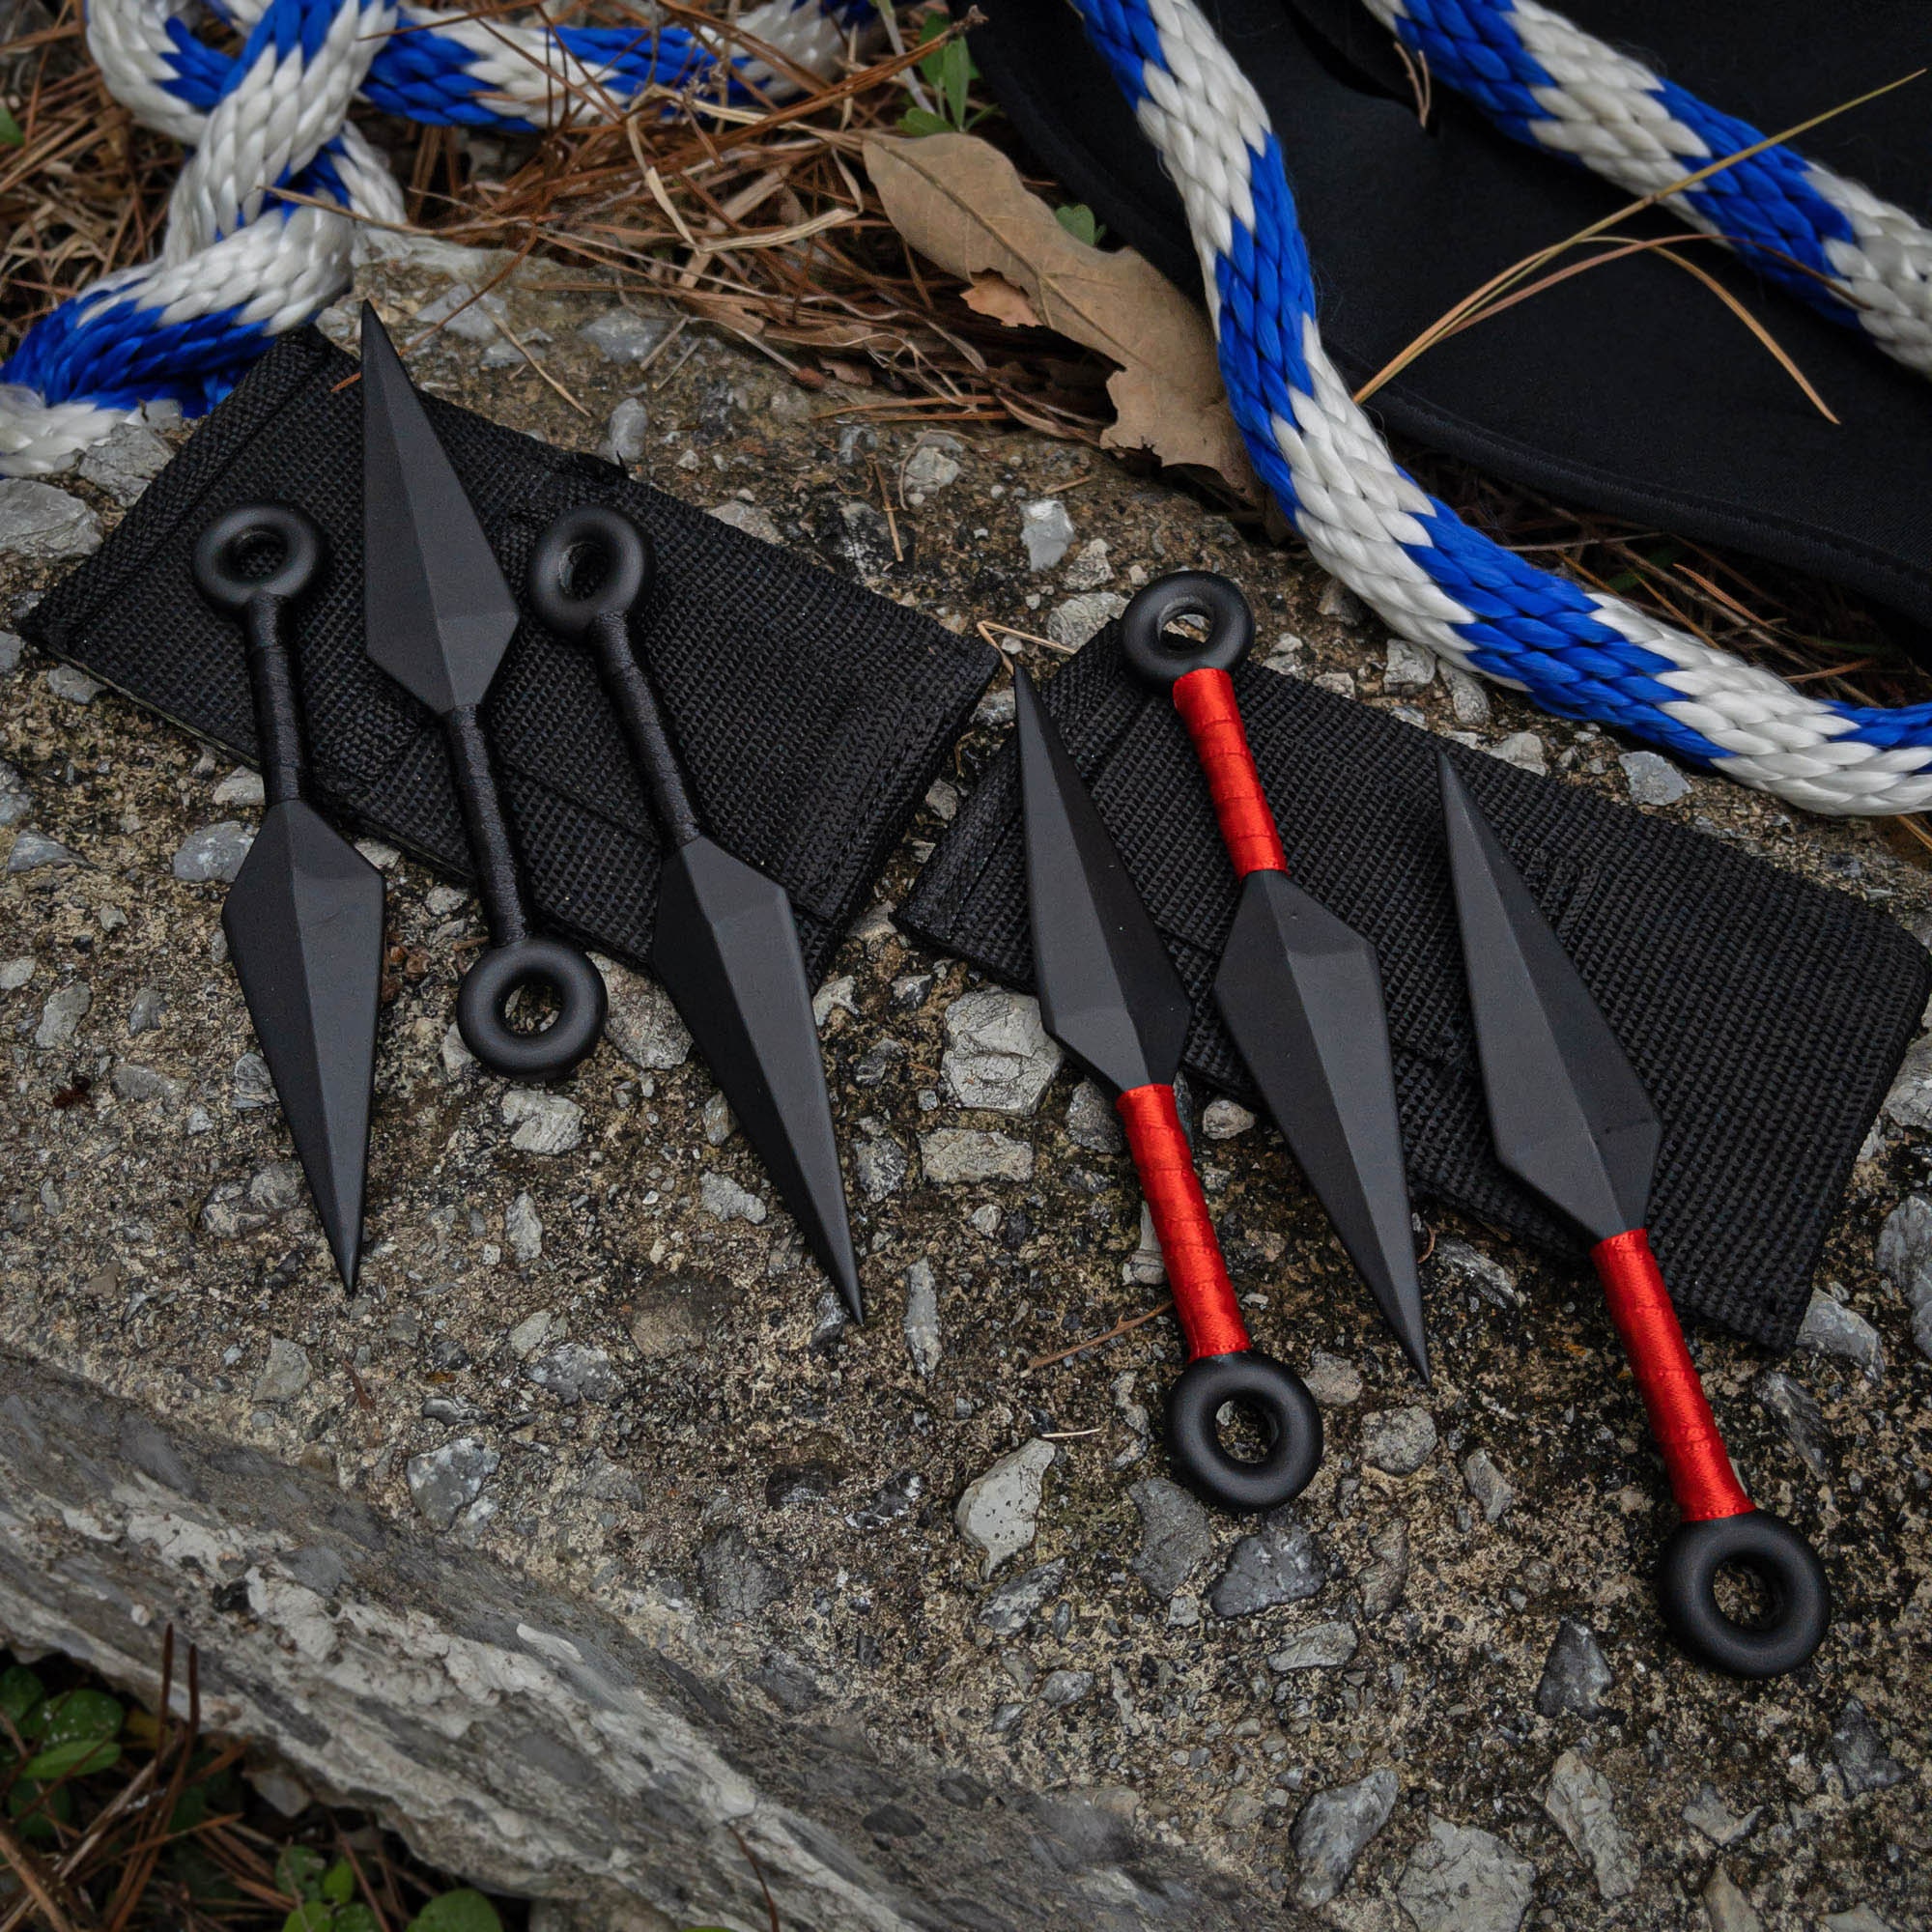  Martial Art Throwing Kits - 6 Set of 6 Ninja Knives with  Nylon case : Sports & Outdoors